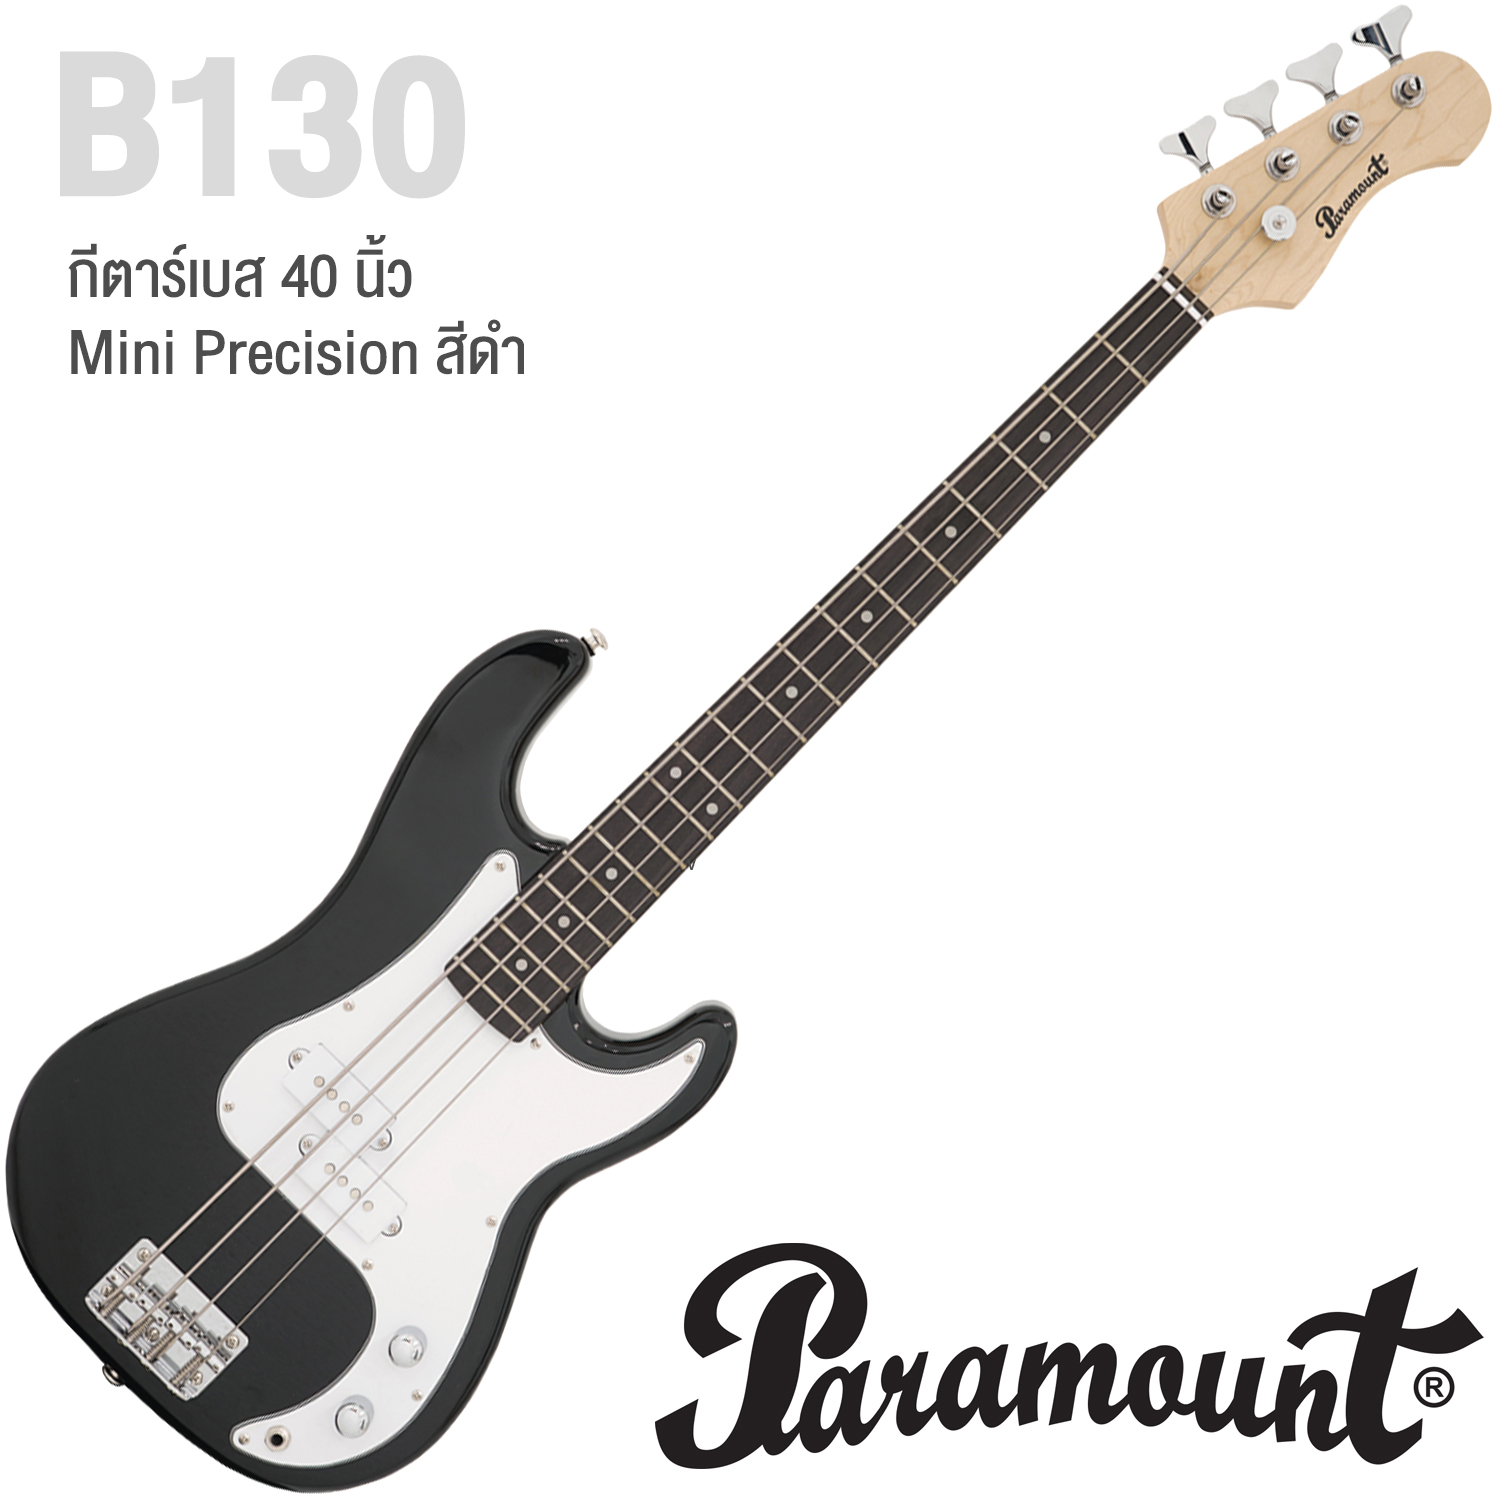 Paramount B130 Mini Precision Bass กีตาร์เบส 40 นิ้ว ไม้ฮาร์ดวู้ด จับคอร์ดเล่นได้ง่ายกว่าเบสมาตรฐาน (สีดำ) ** ประกันศูนย์ 1 ปี **